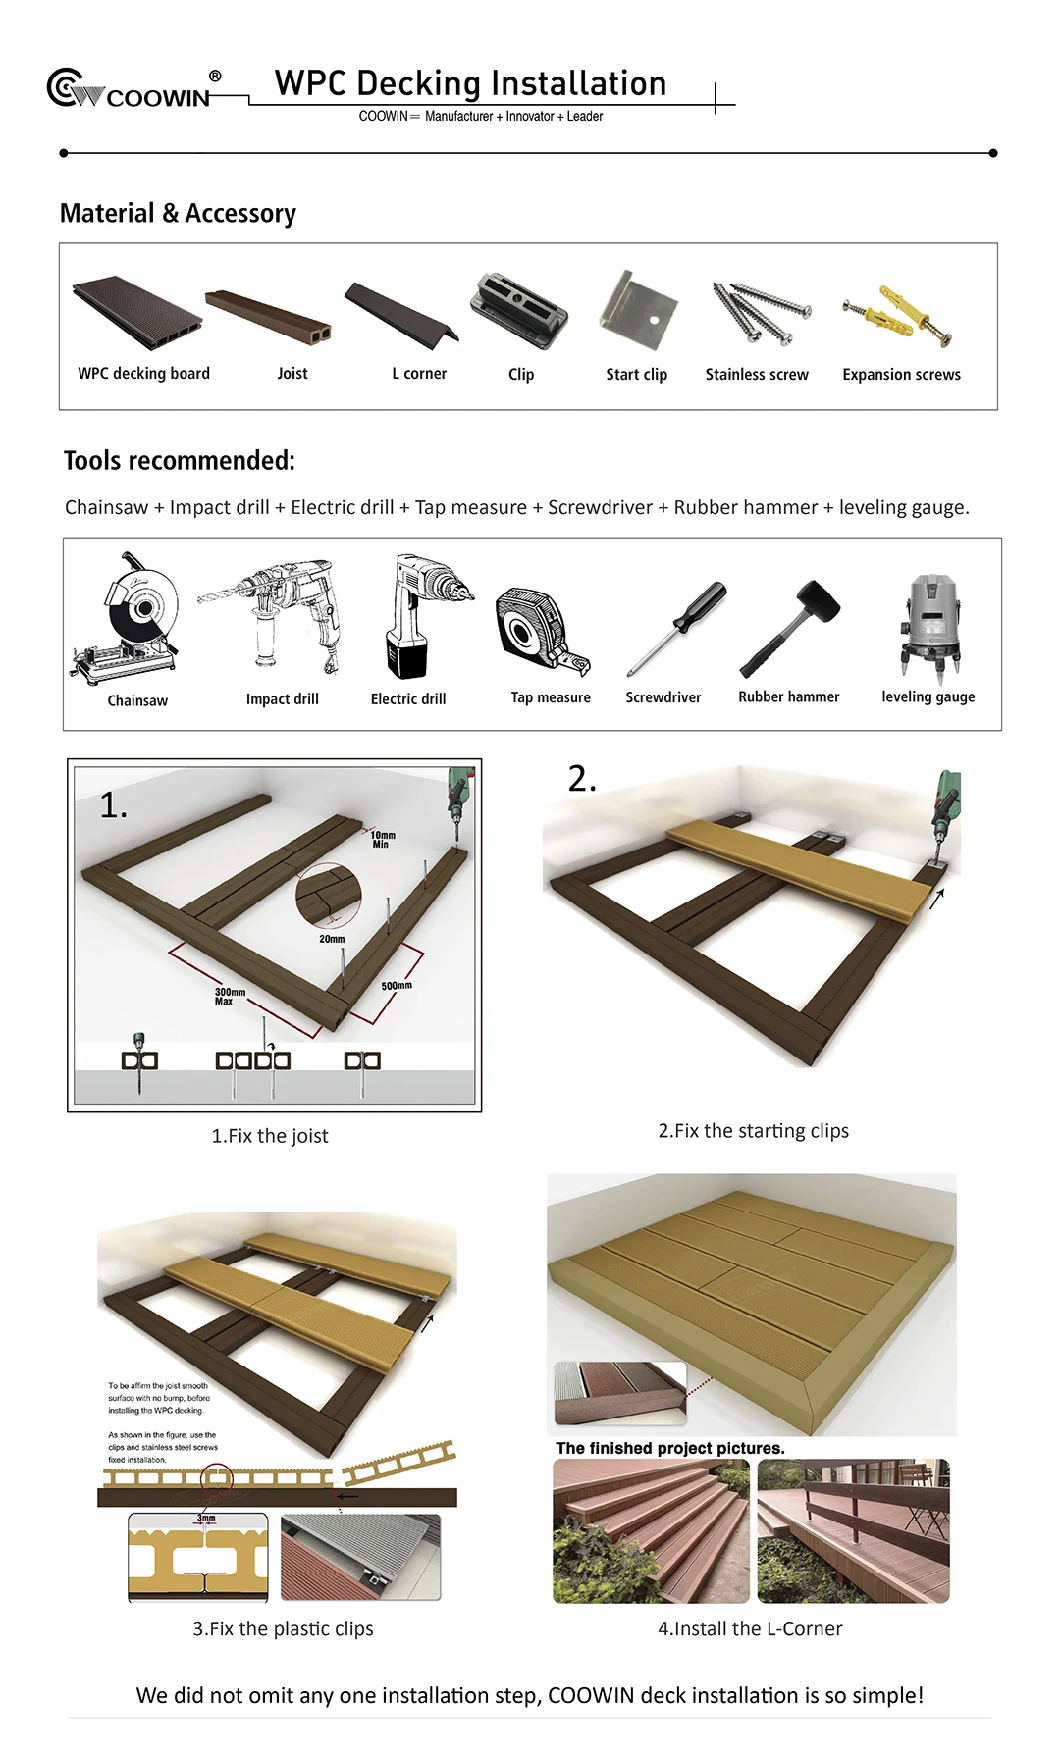 140X25mm Waterproof Anti Slip Scratch Resistant WPC Timber Panel Composite Solid Deck Outdoor